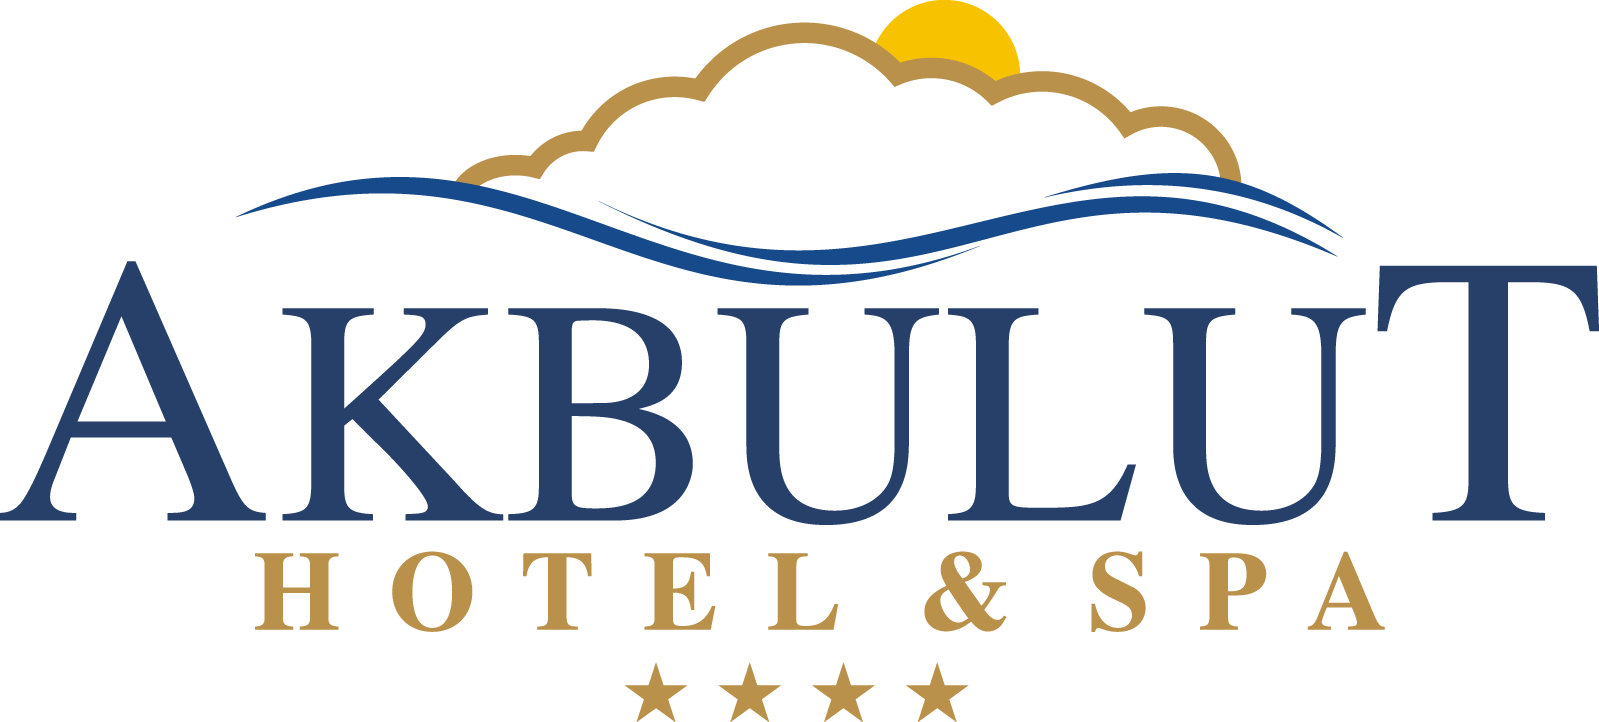 Hotel Akbulut